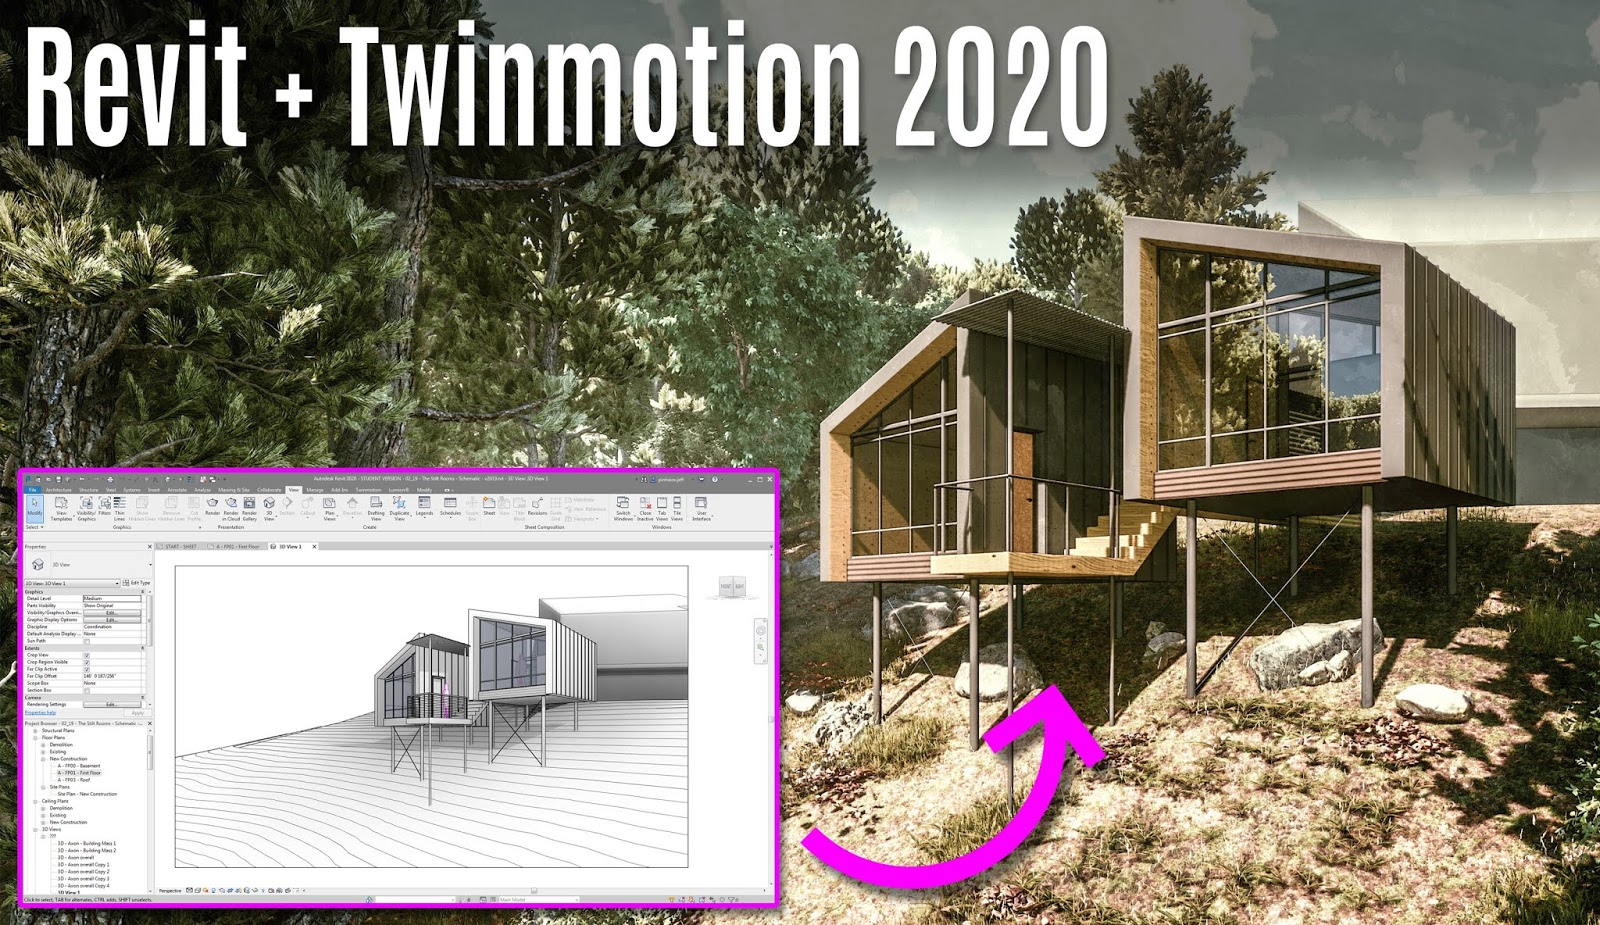 twinmotion 2020 presenter